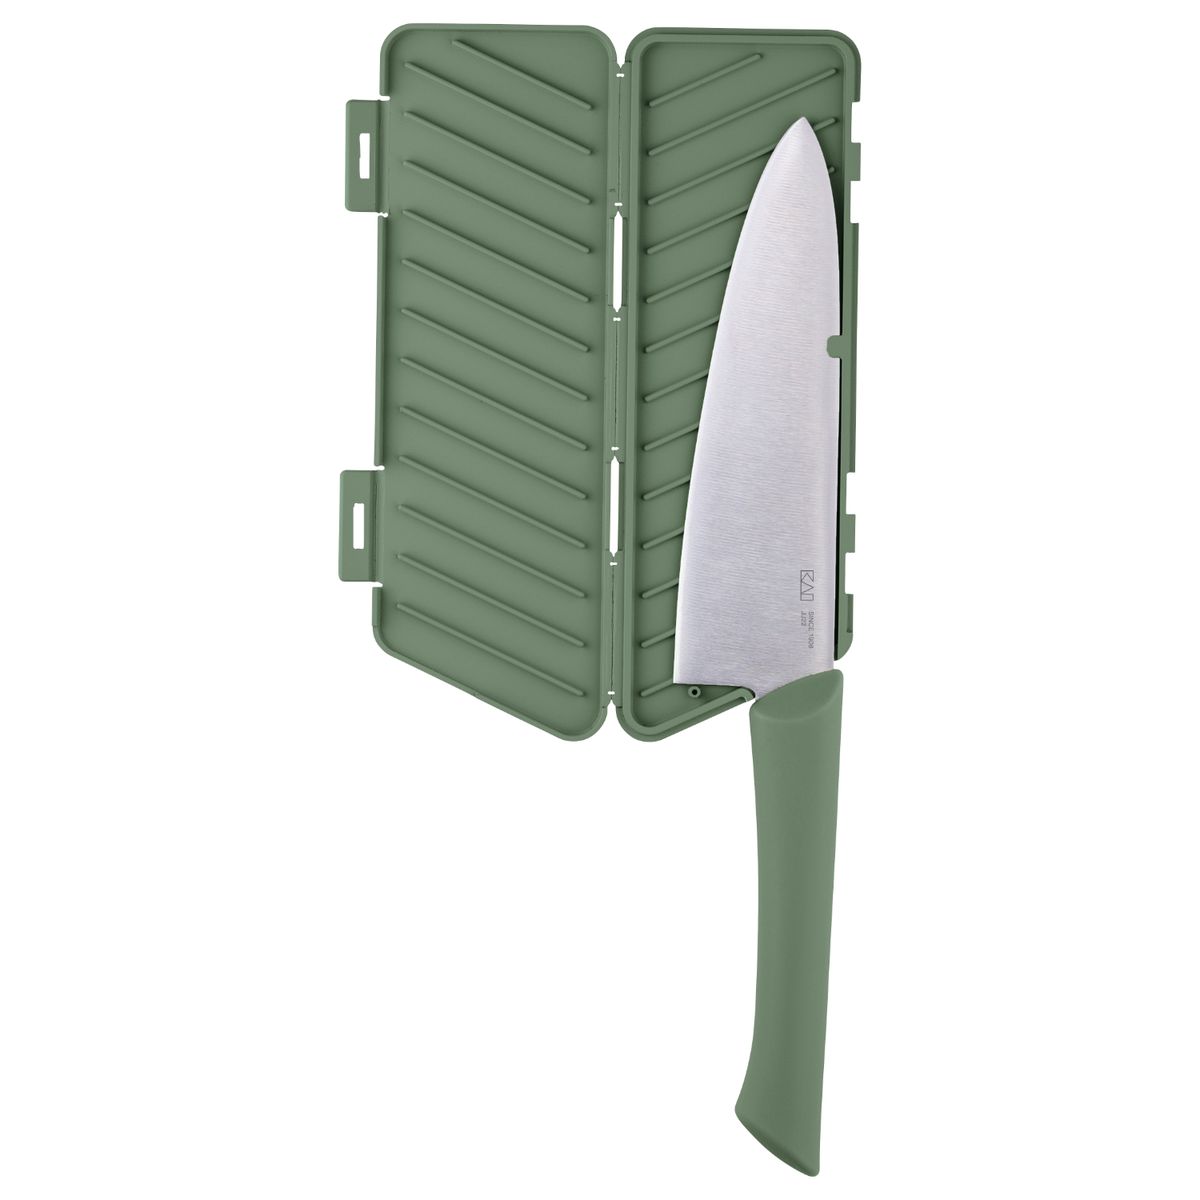 KAI MANASAYA マルチナイフ 包丁 150mm グリーン 鞘 サヤ付 マナ板 アウトドア 食洗器対応 ステンレス 衛生的